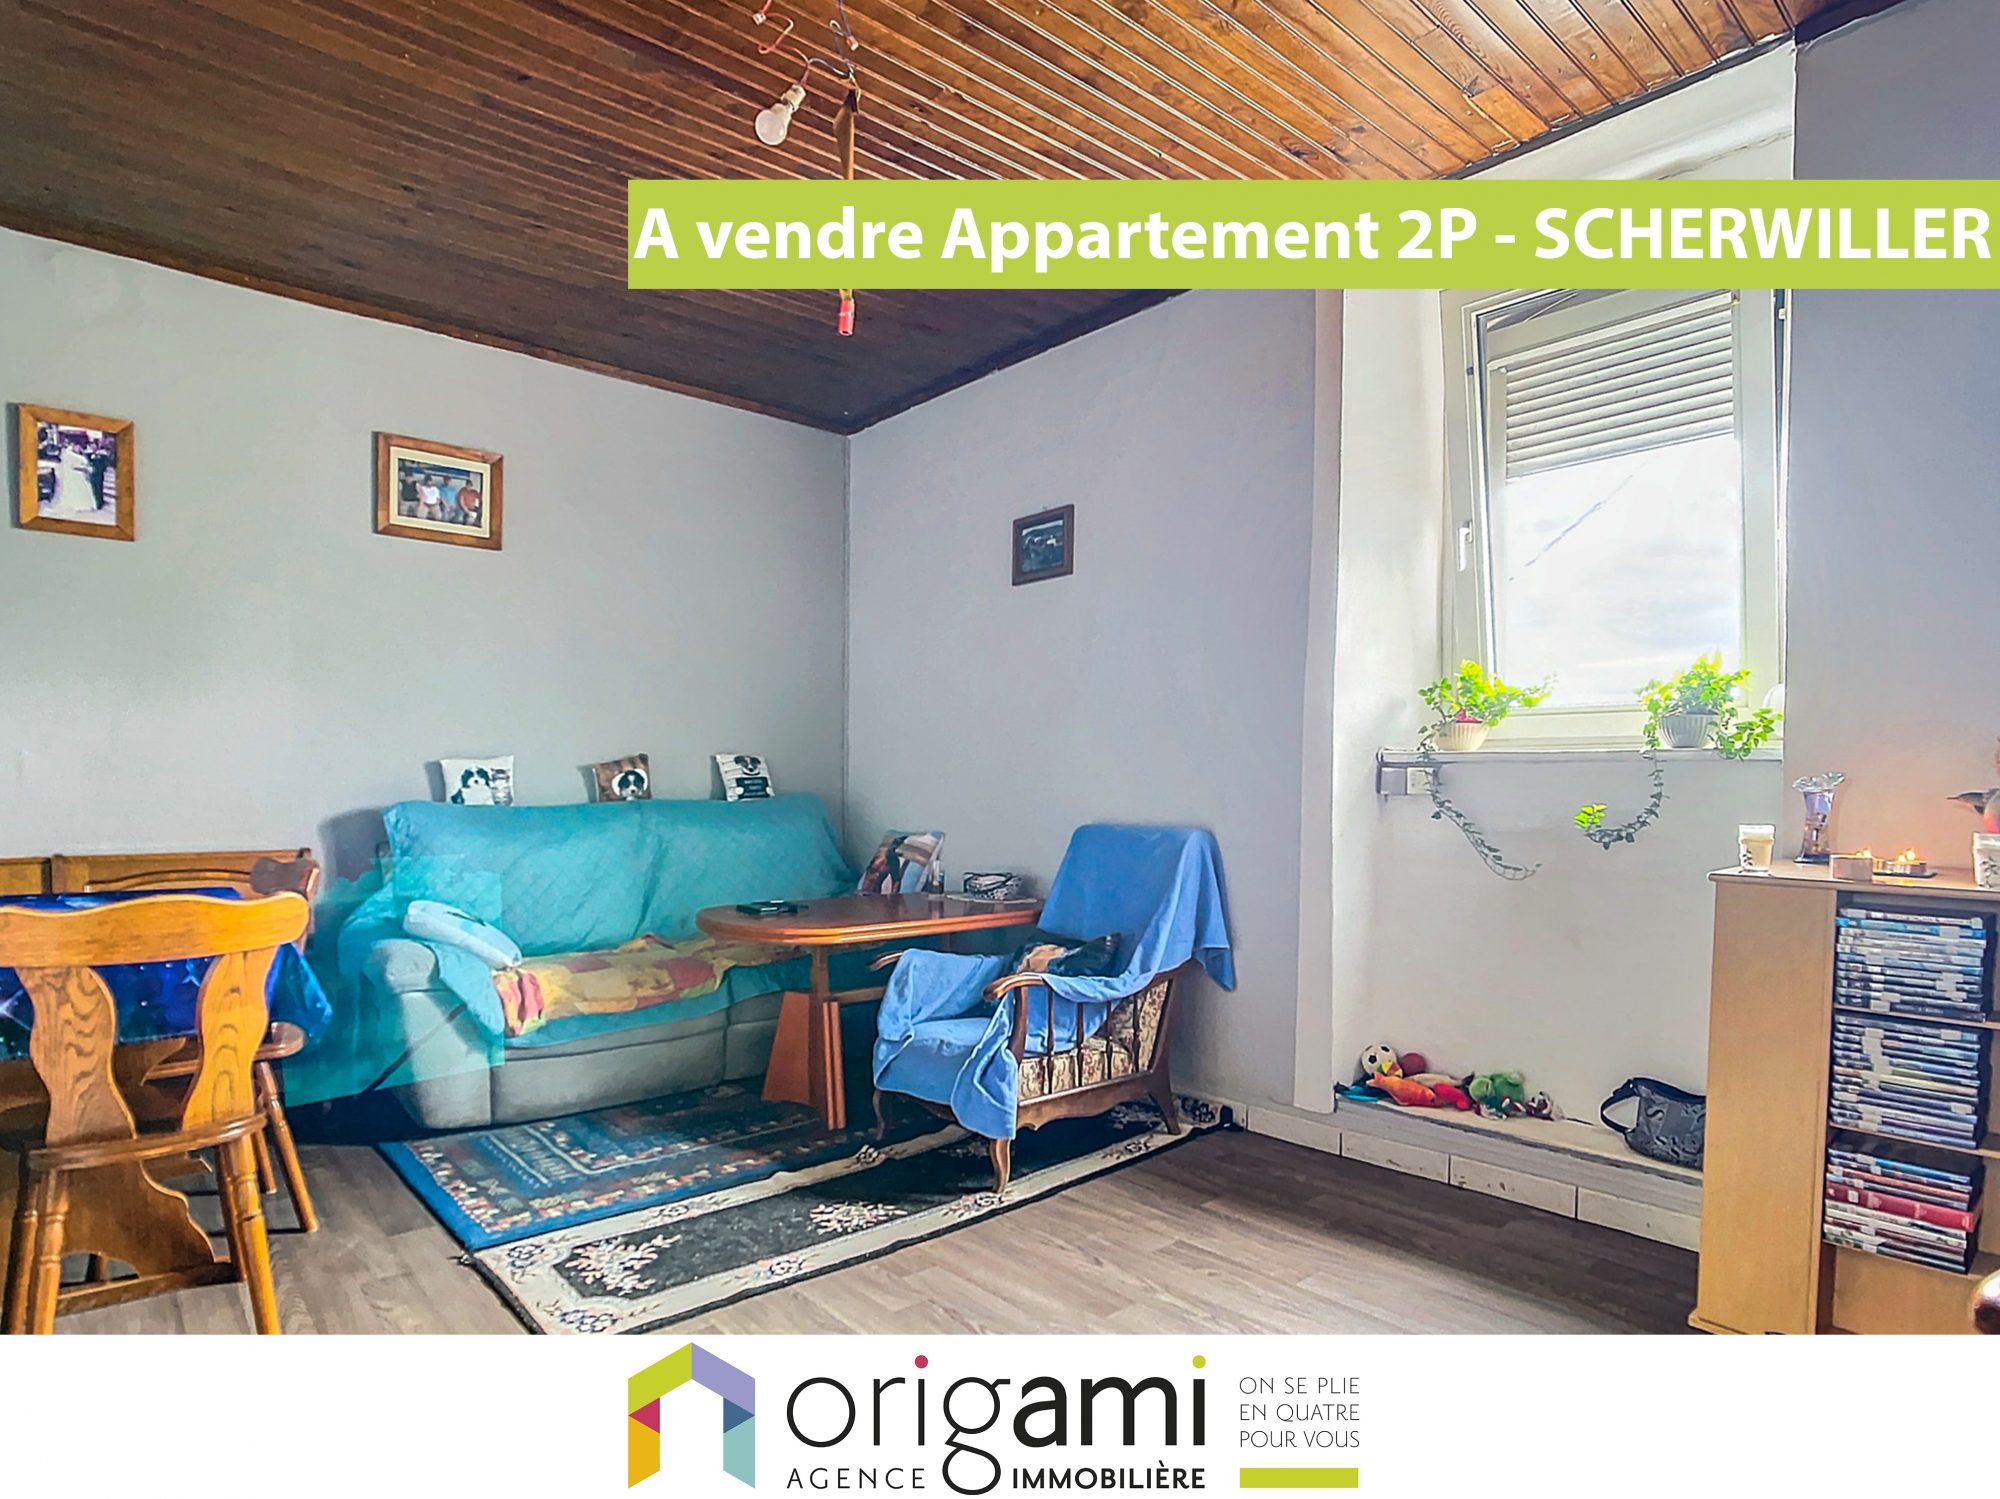 Vente Appartement 44m² 2 Pièces à Scherwiller (67750) - Origami